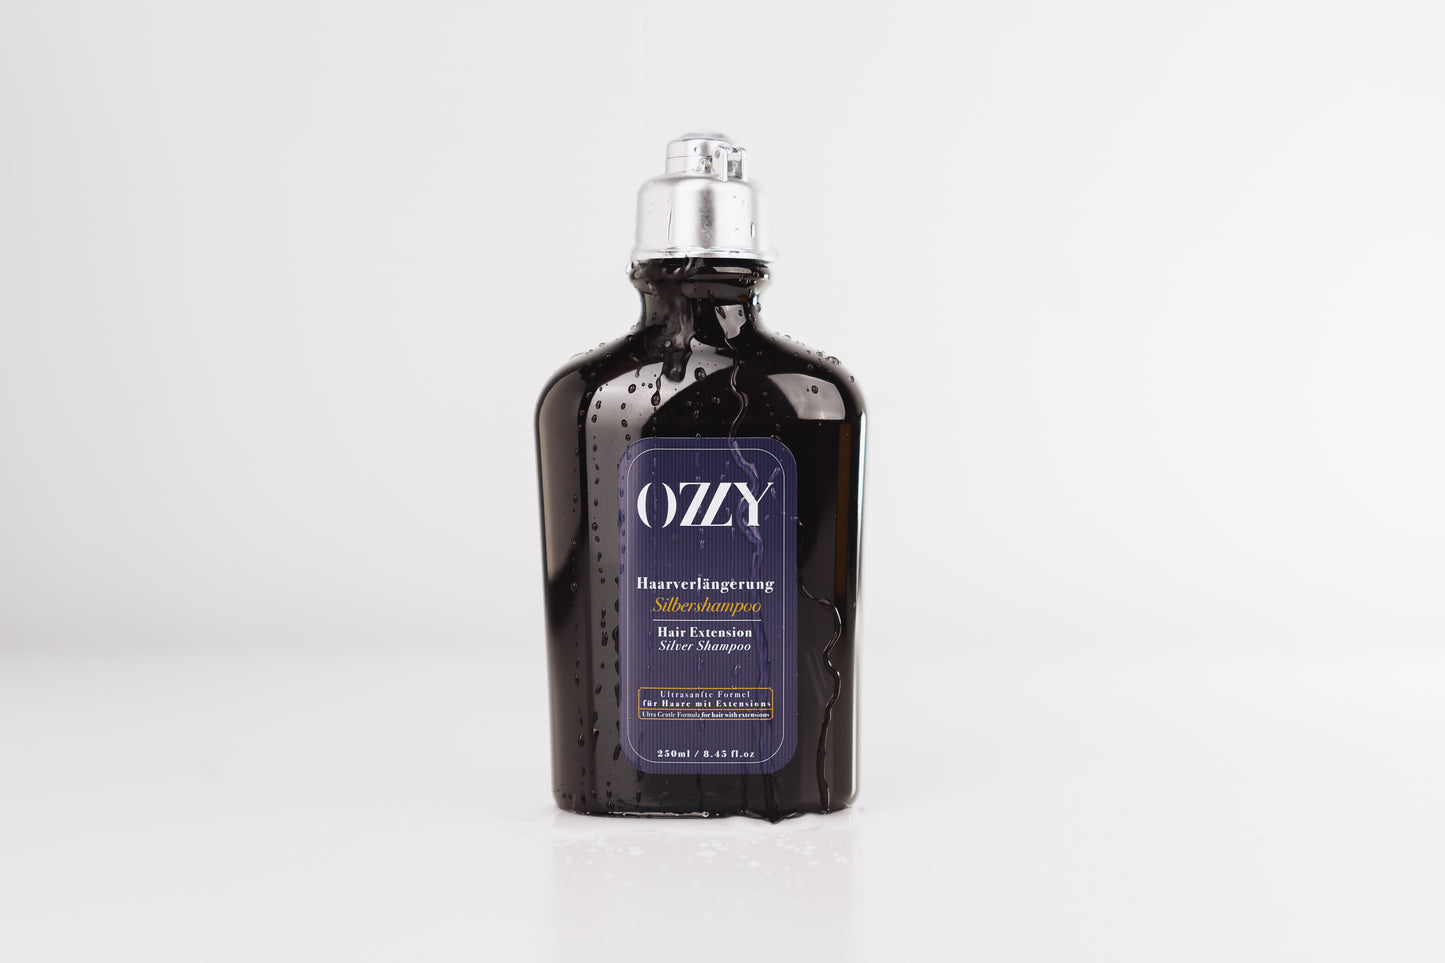 Ozzy Extensions Silbershampoo 250 ml